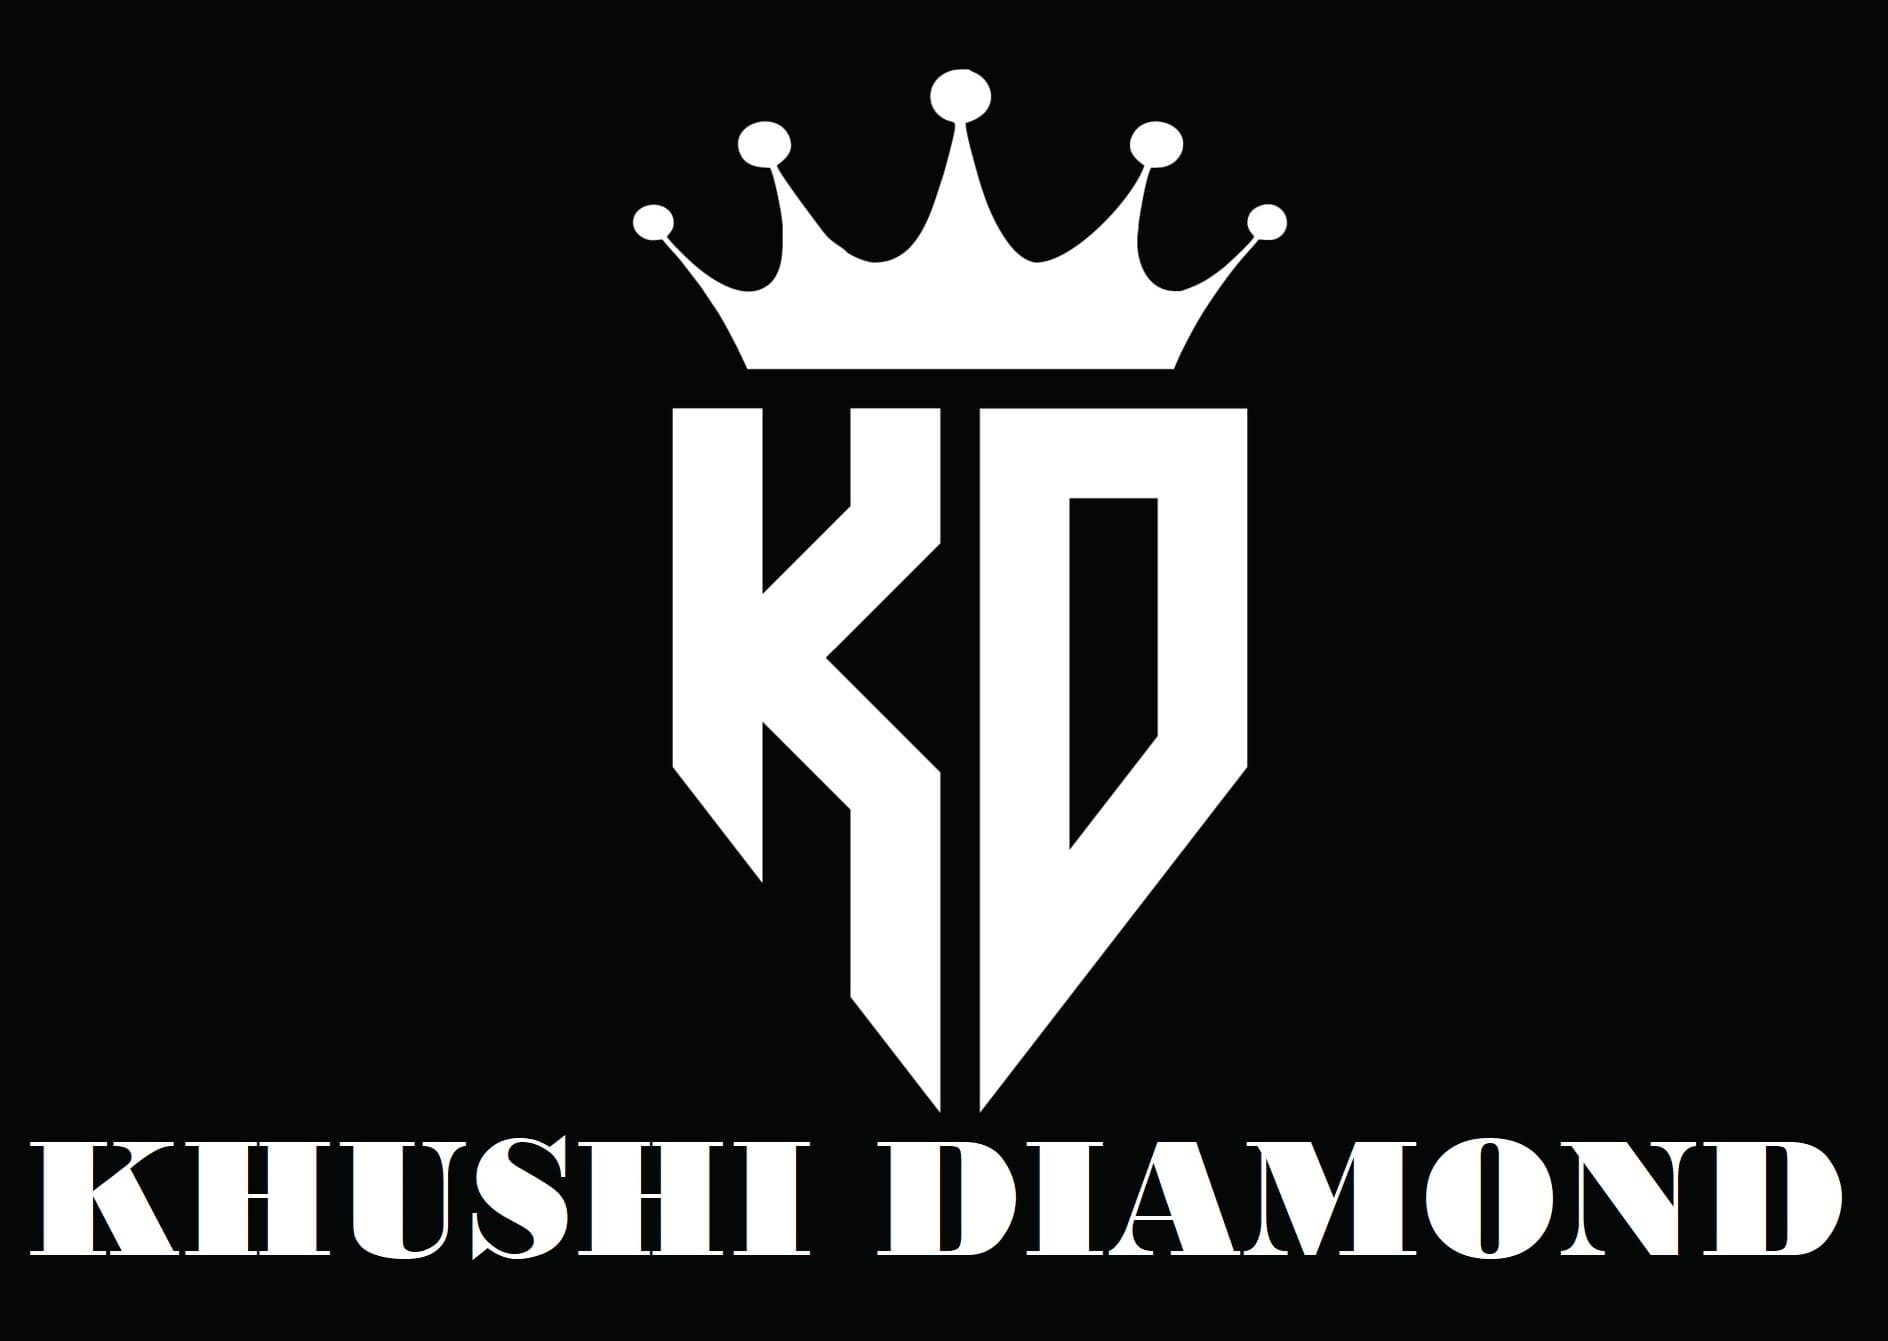 Khushi Diamond